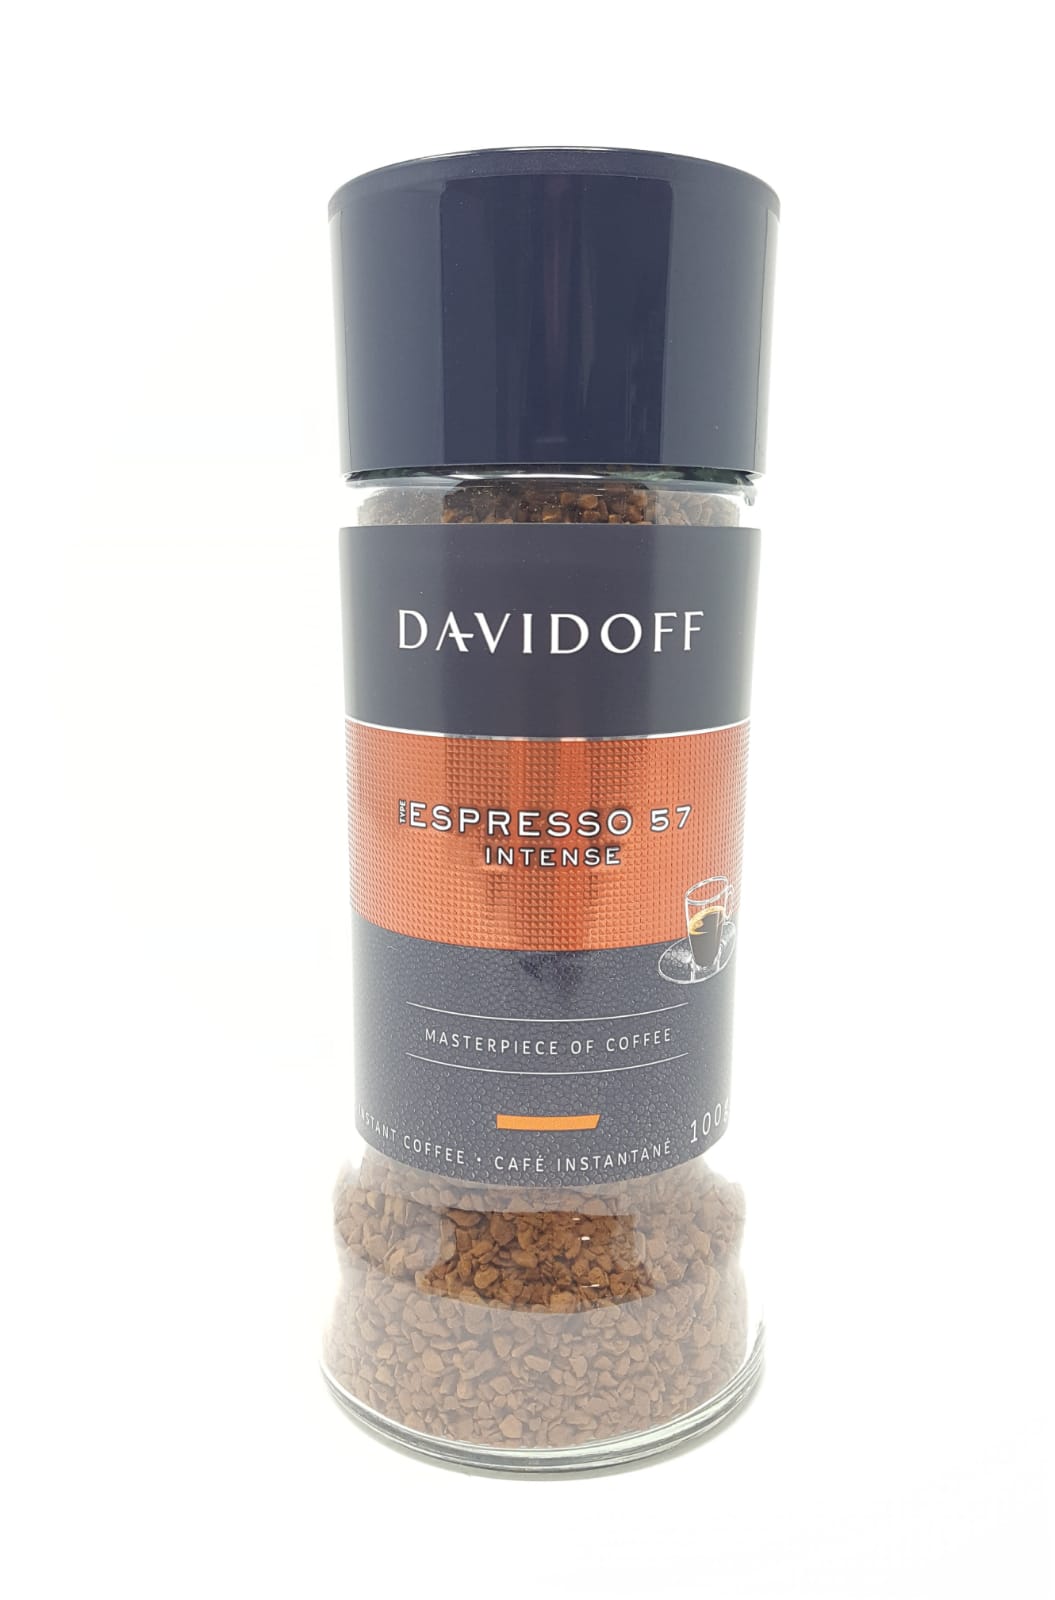 DAVIDOFF TYPE ESPRESSO 57 INTENSE INSTANT COFFEE GLASS 100g